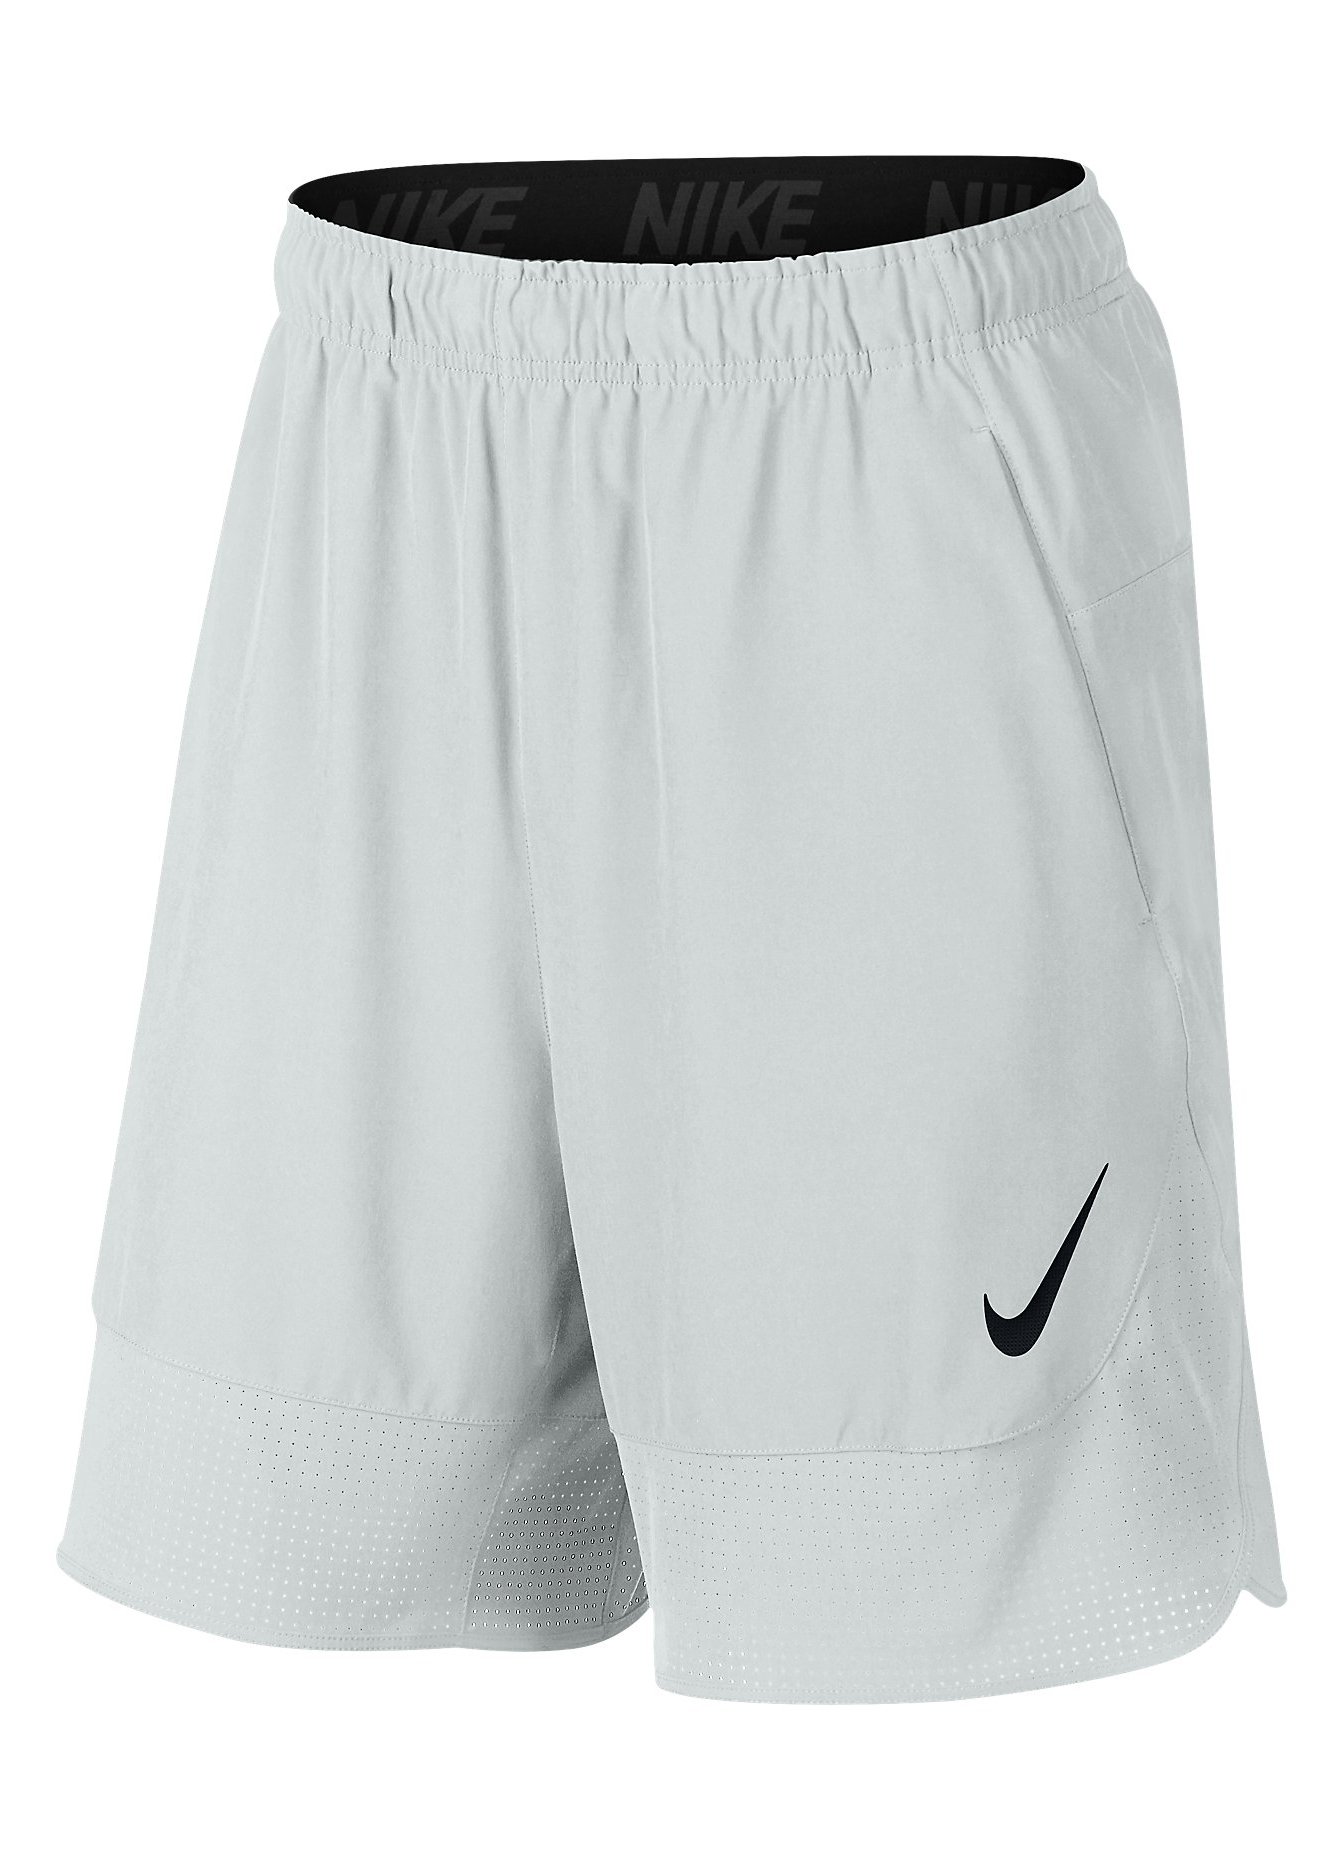 Pantalón corto Nike 8" - Top4Fitness.com